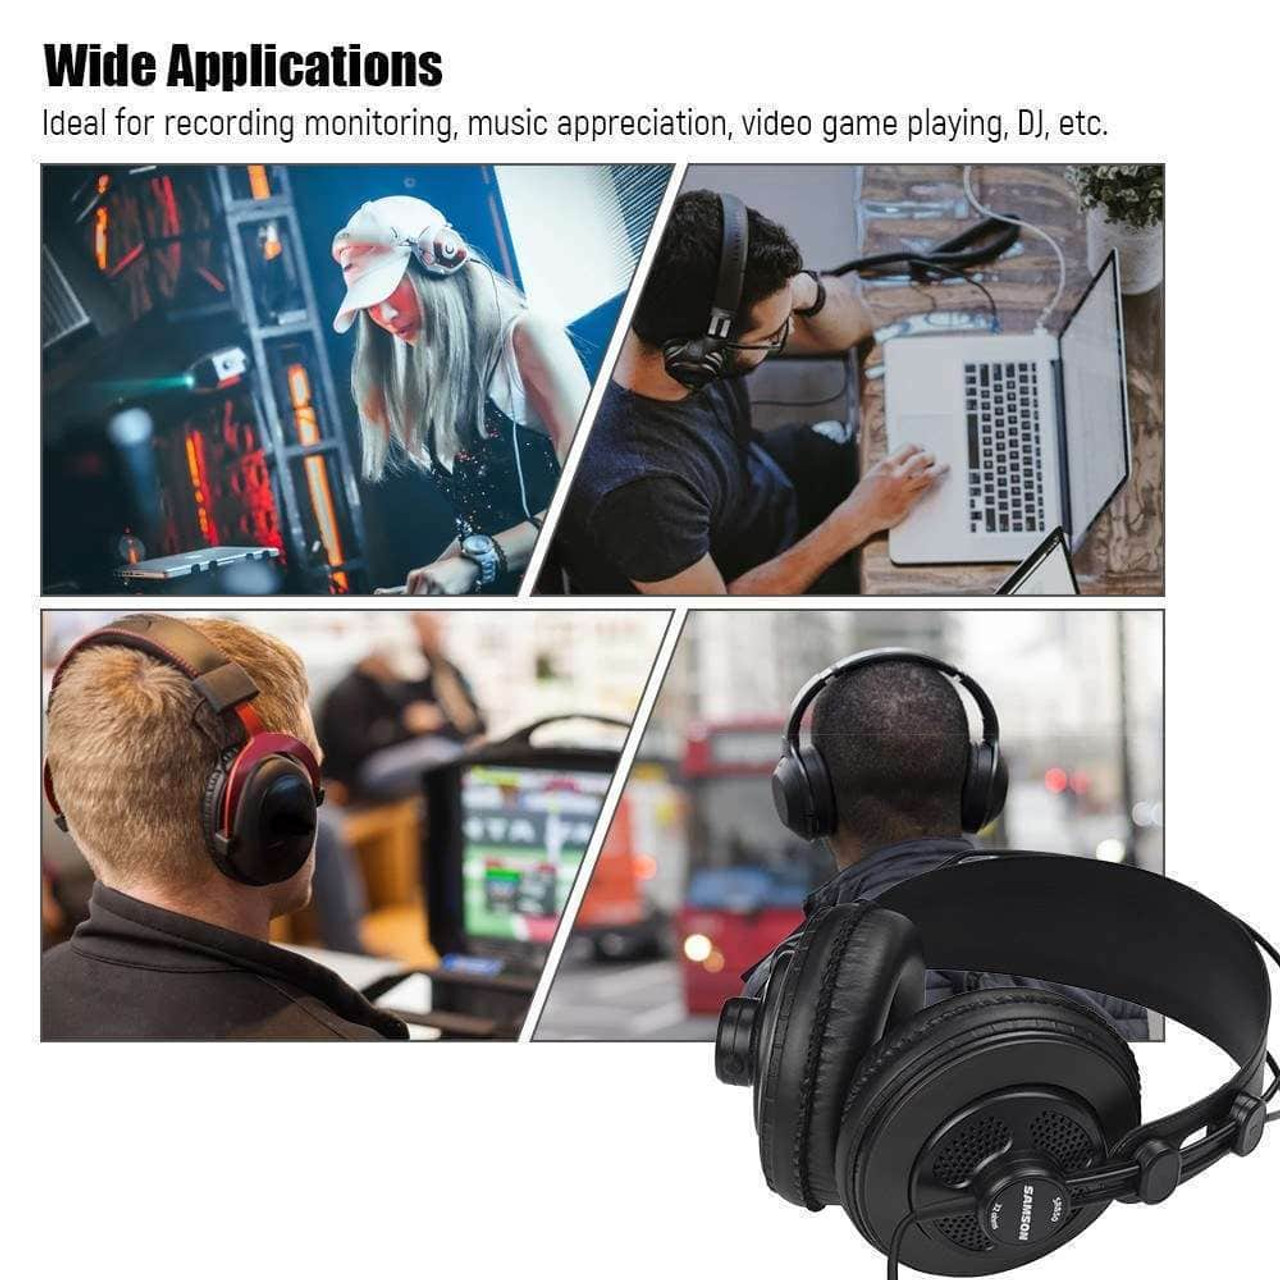 SAMSON SR850 Professional Studio Headphones For DJ & Gaming